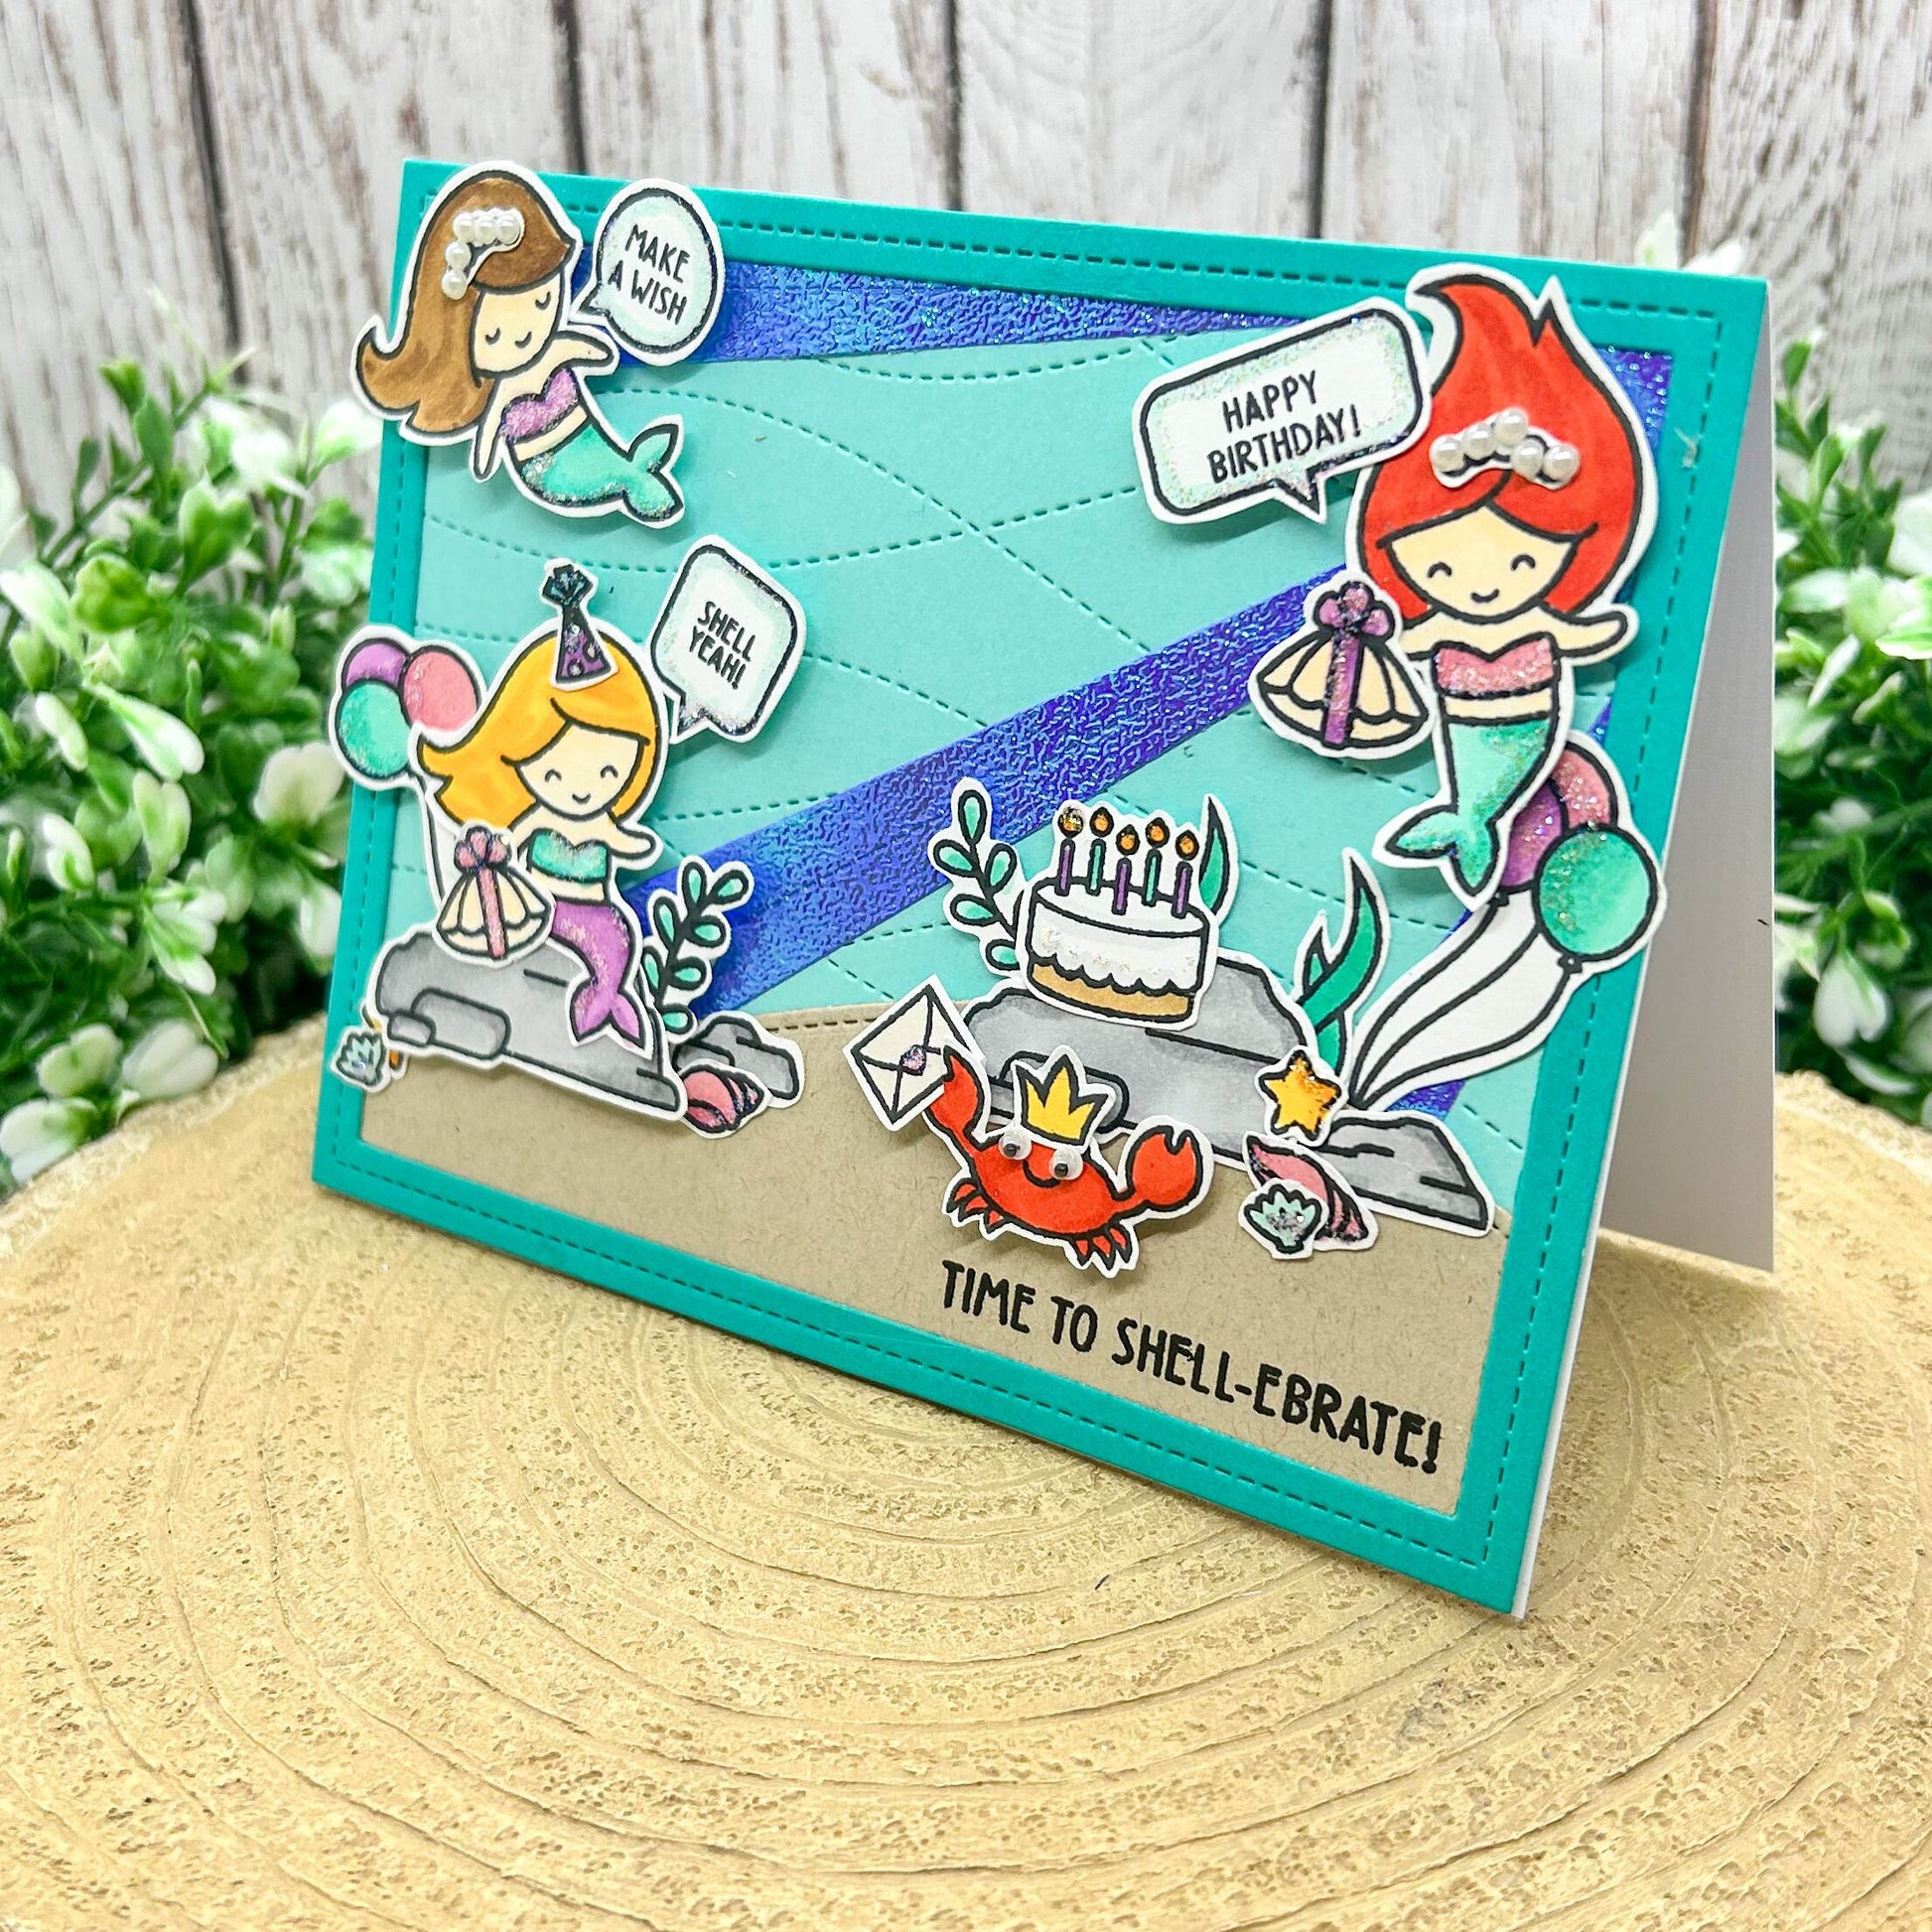 Time To Shell-ebrate! Mermaid Party Handmade Birthday Card-2